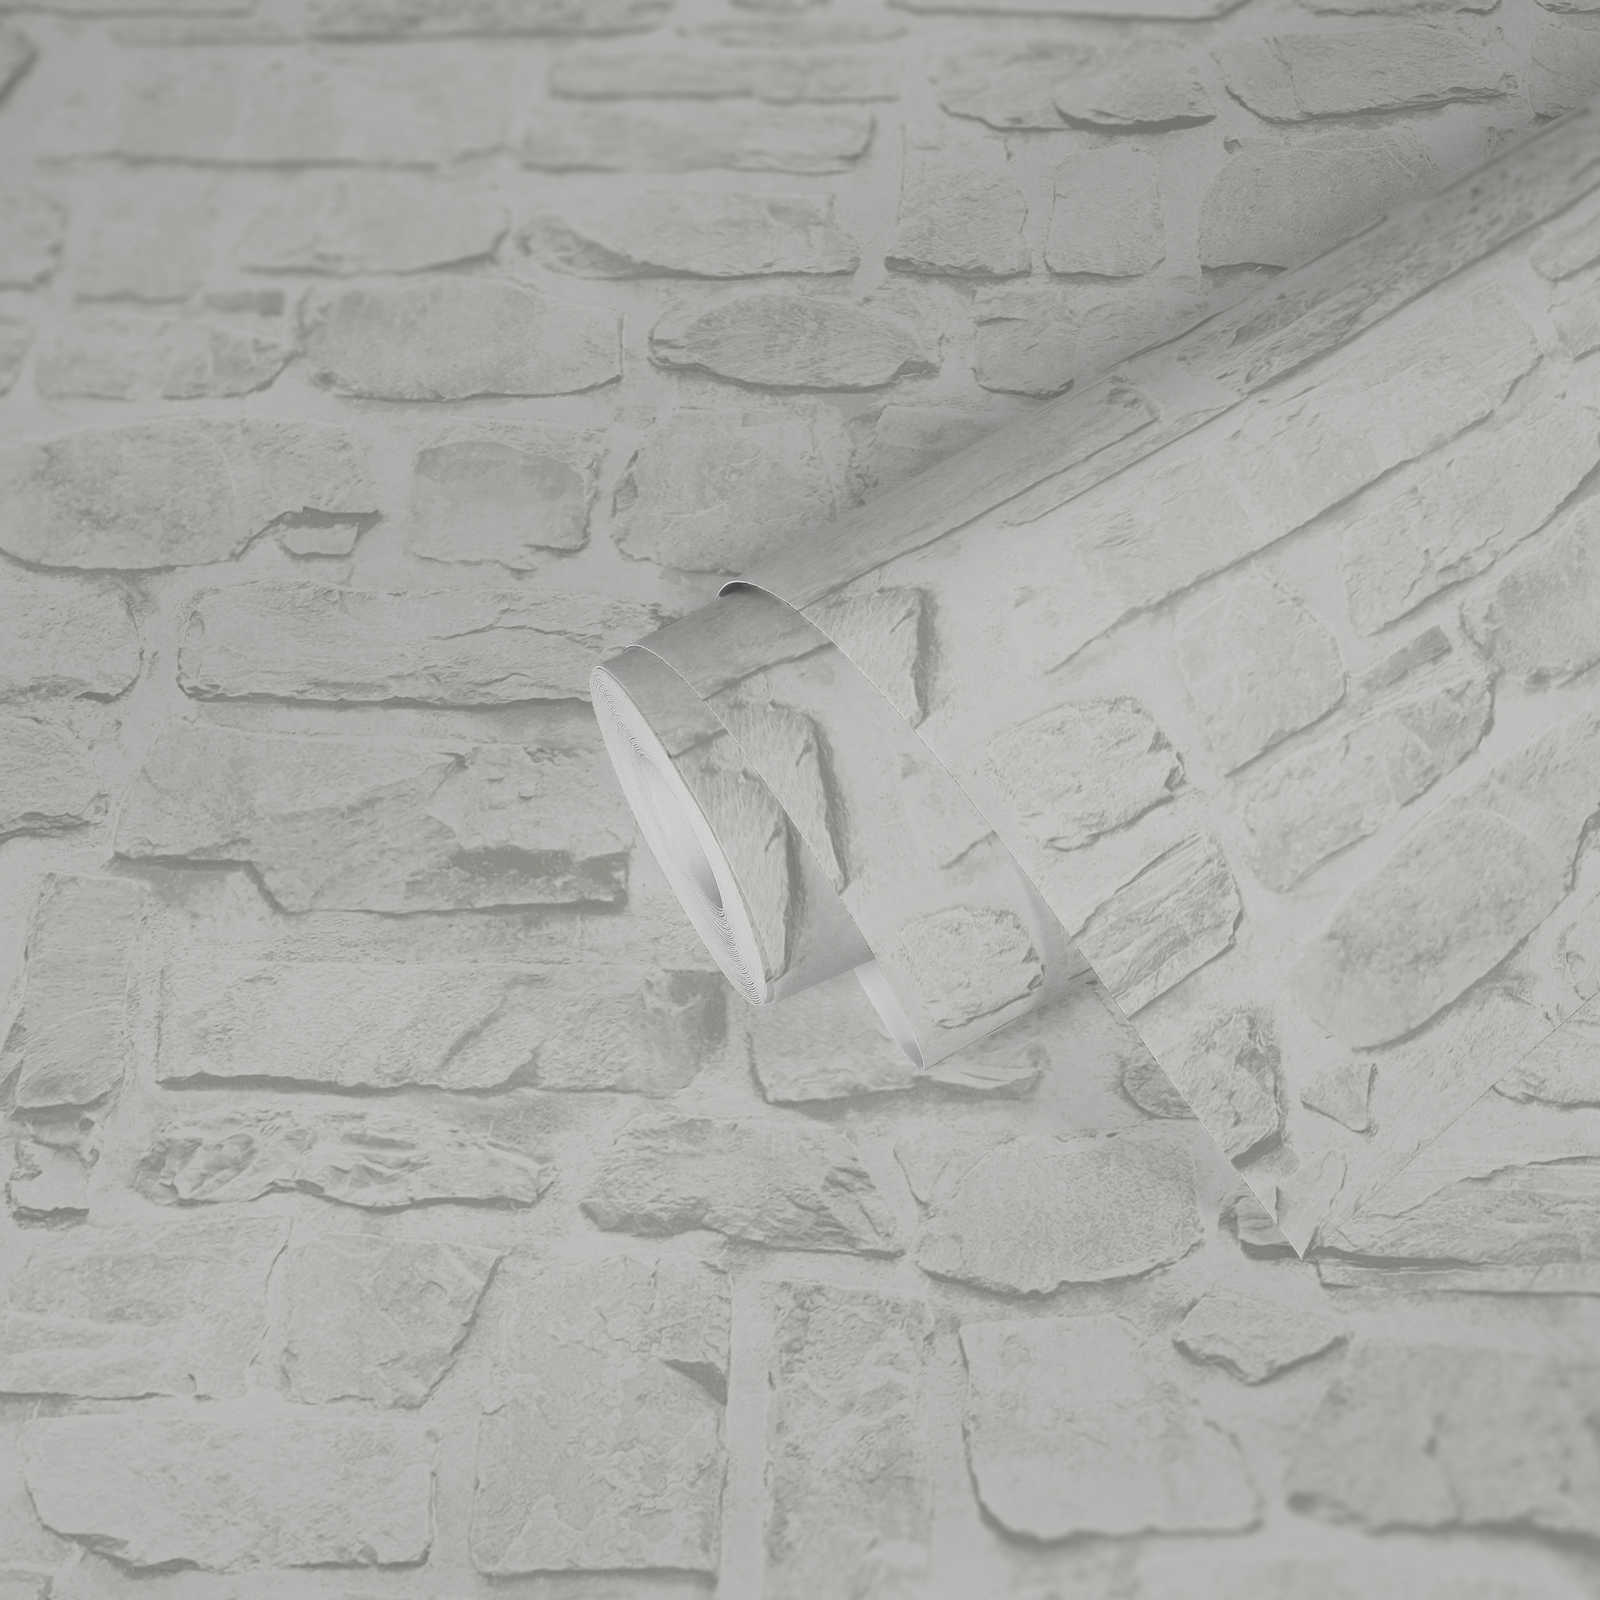             Self-adhesive wallpaper | White stone look with 3D optics - white, grey
        